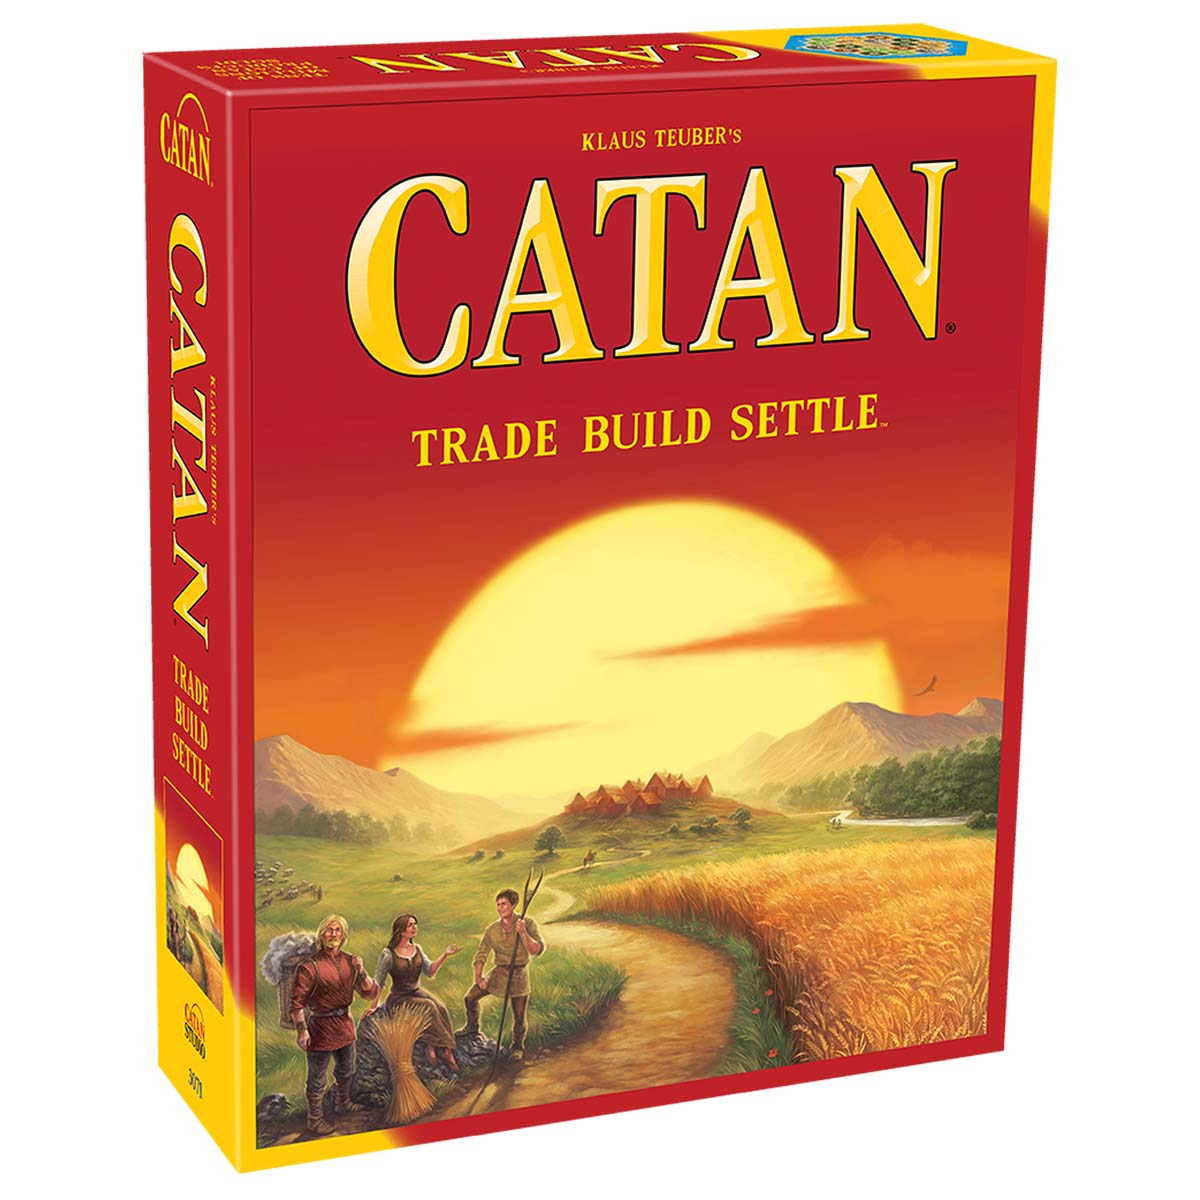 Catan board game box